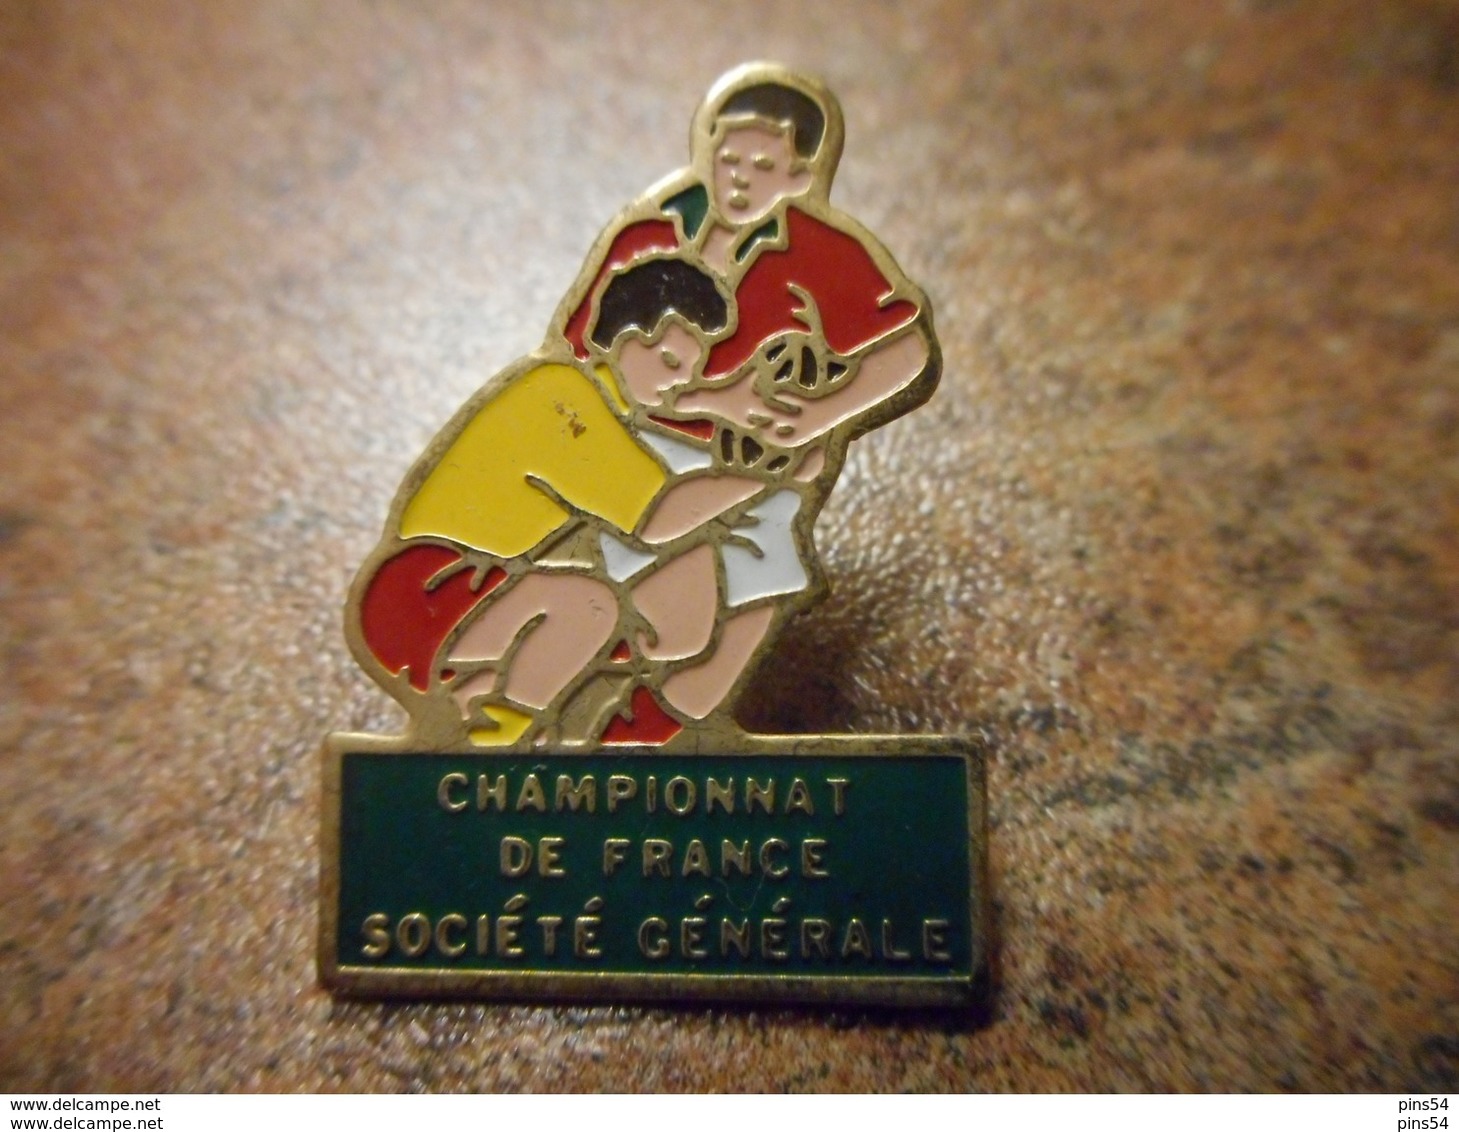 A029 -- Pin's Championnat De France Societe Generale - Rugby